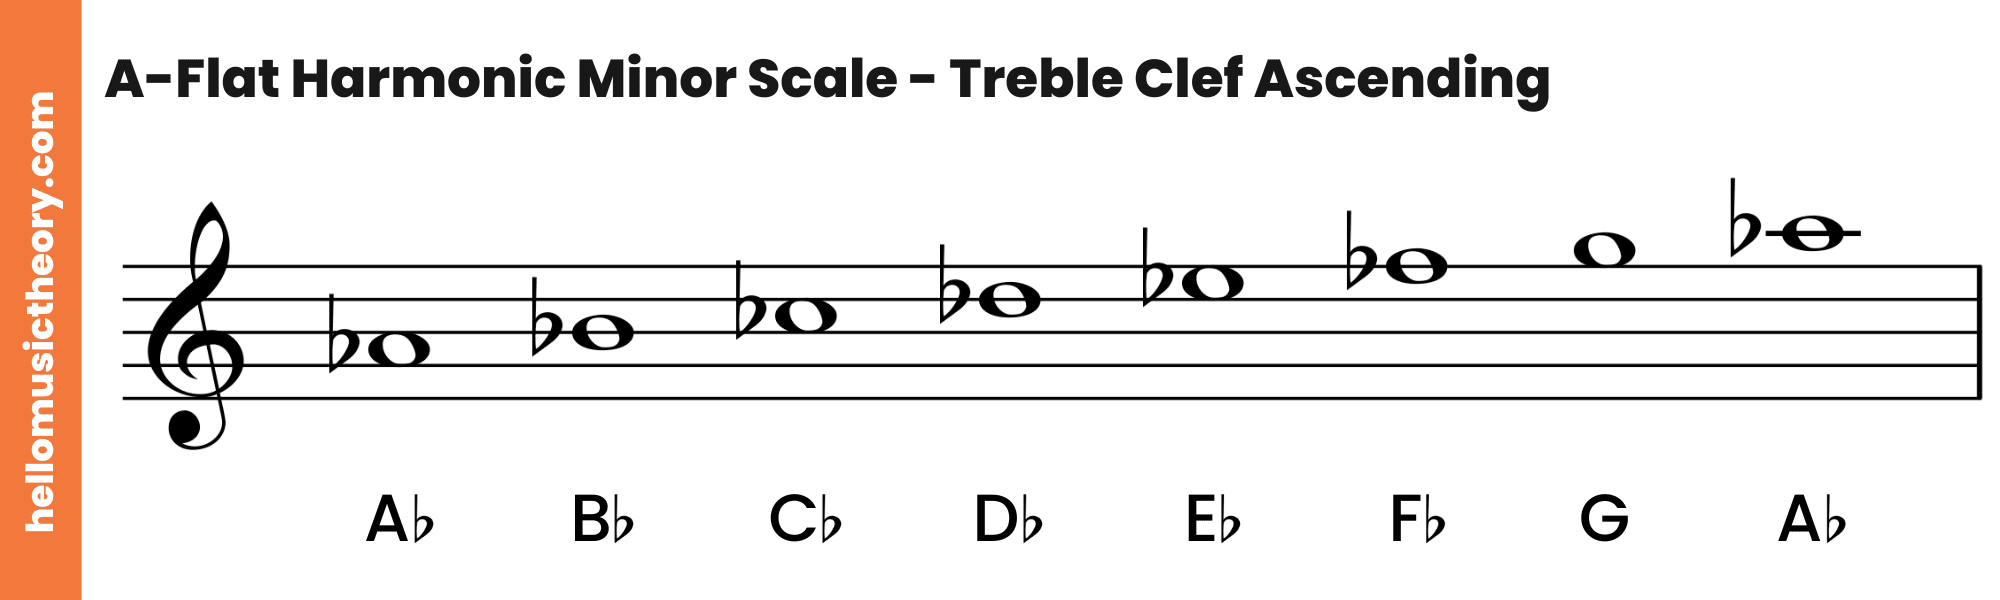 A-Flat Harmonic Minor Scale Treble Clef Ascending